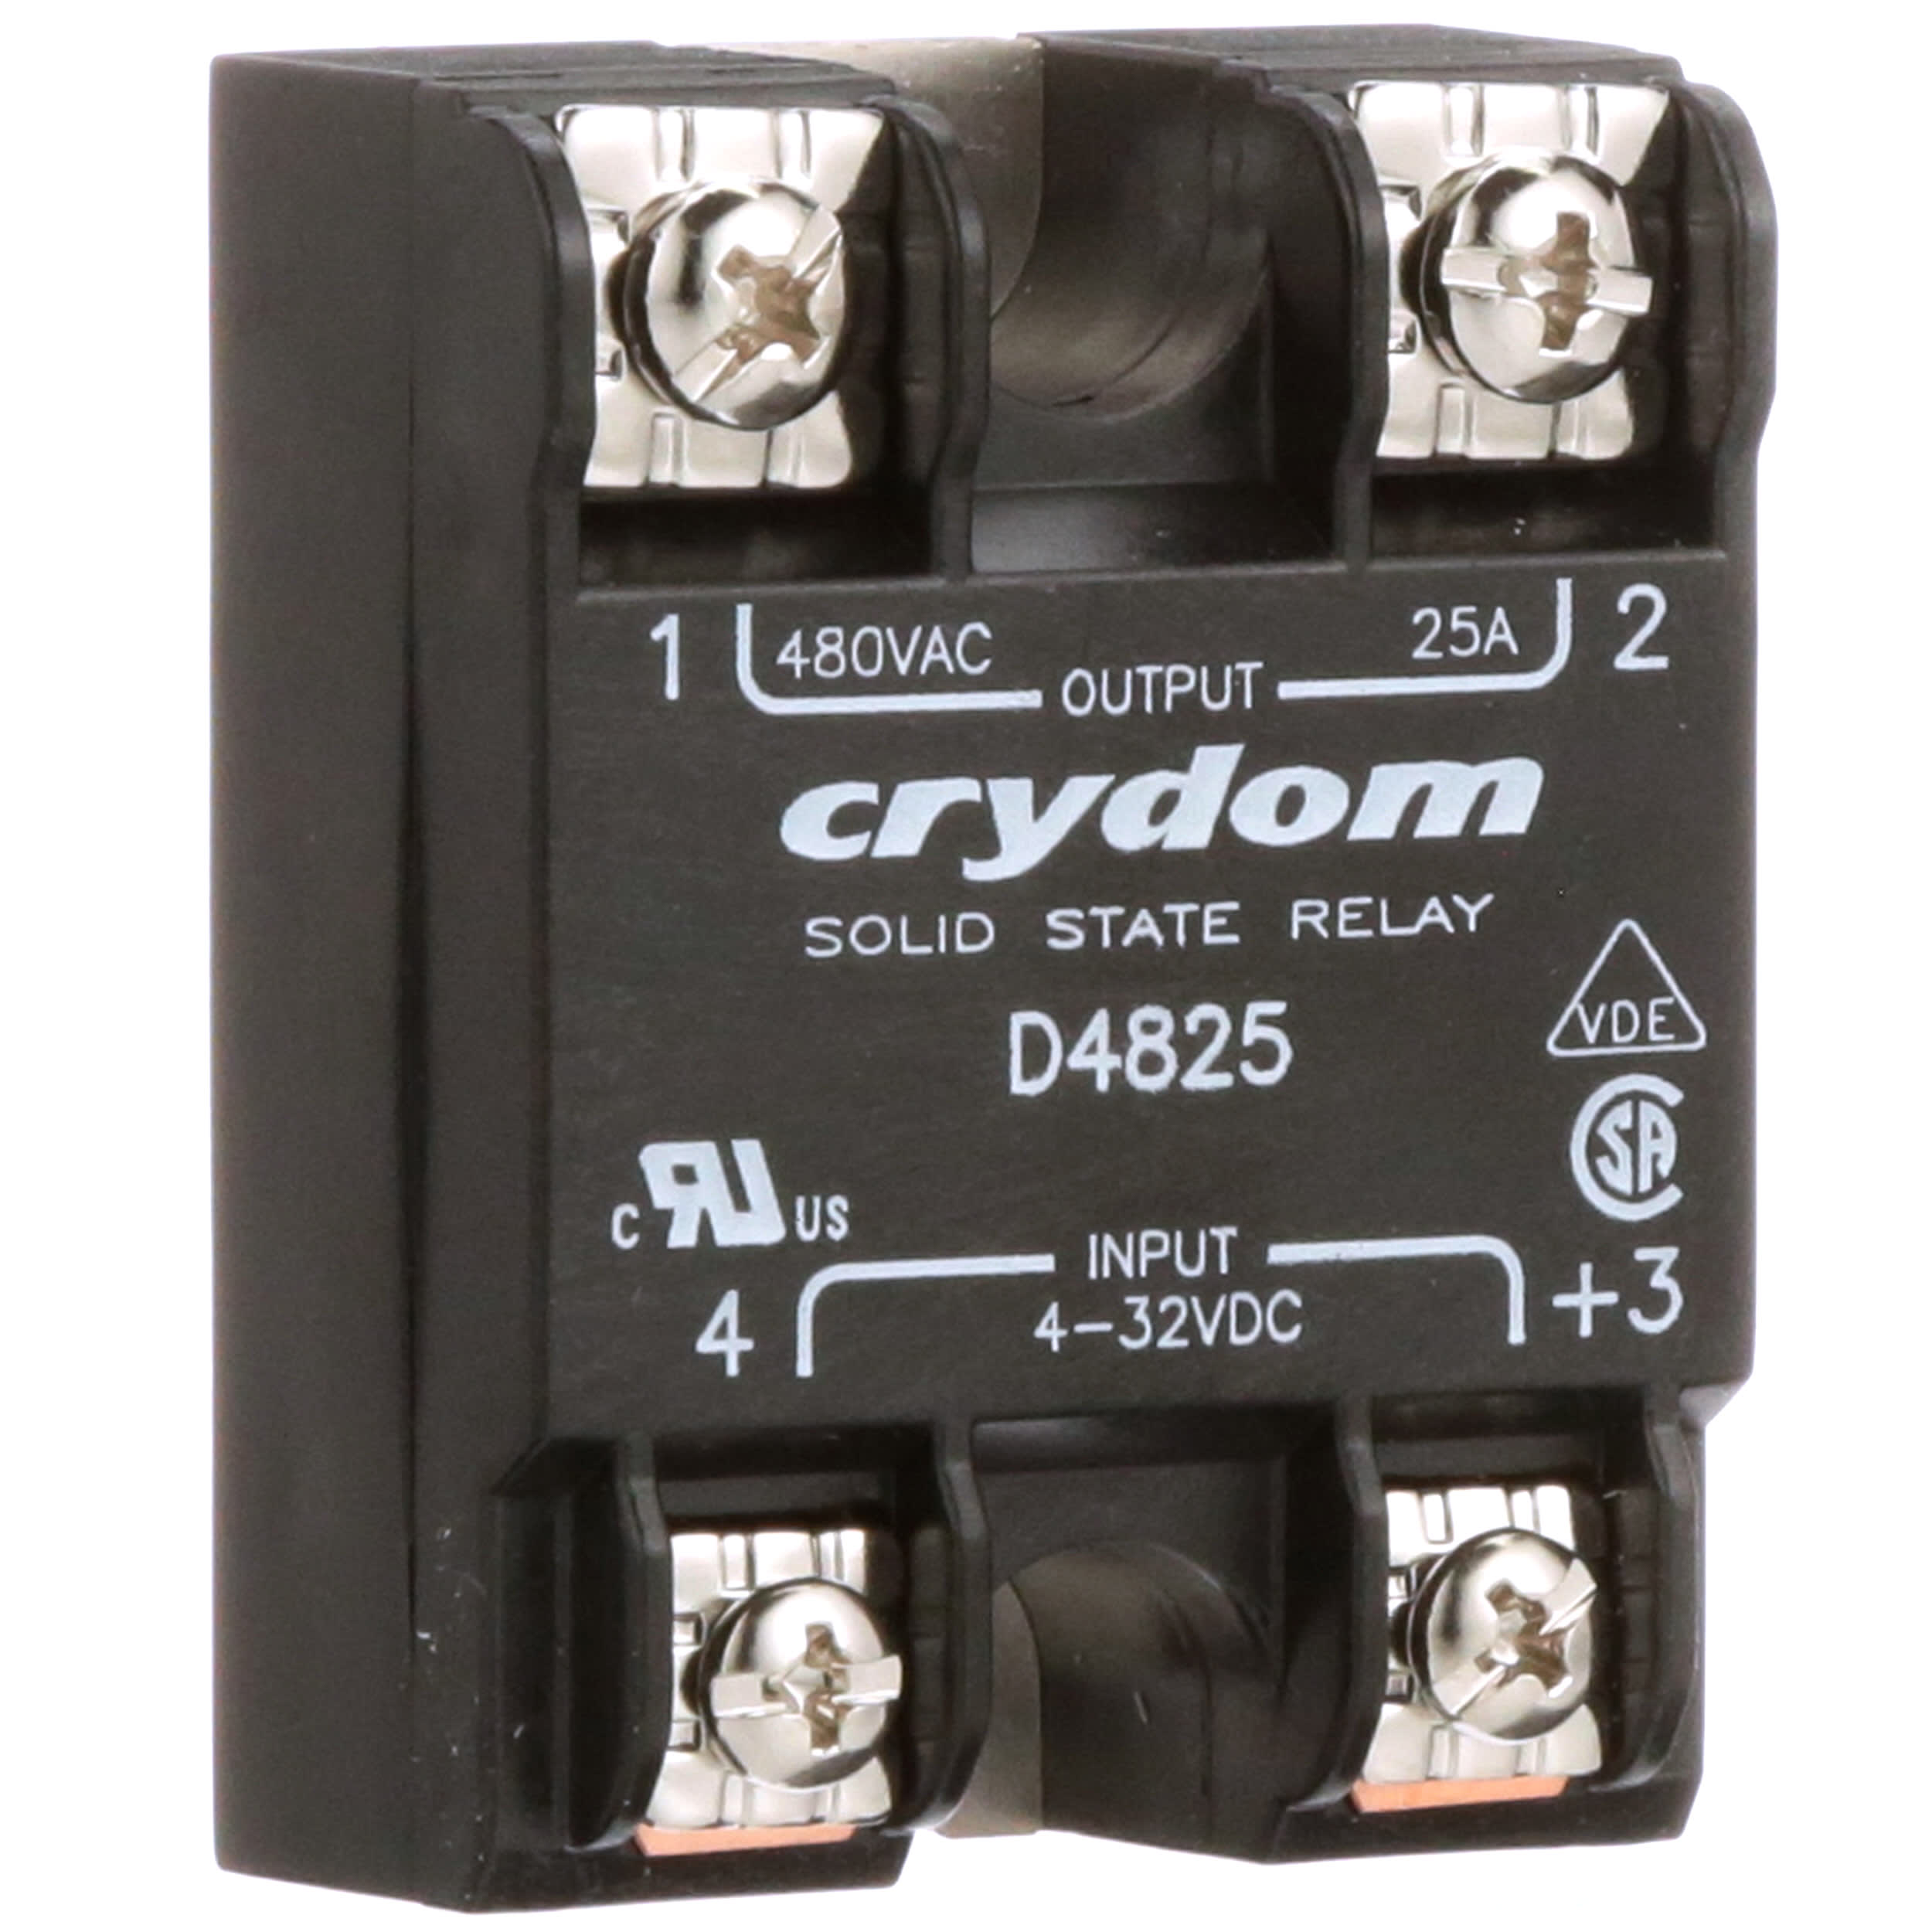   CRYDOM (brand of Sensata Technologies) D4825